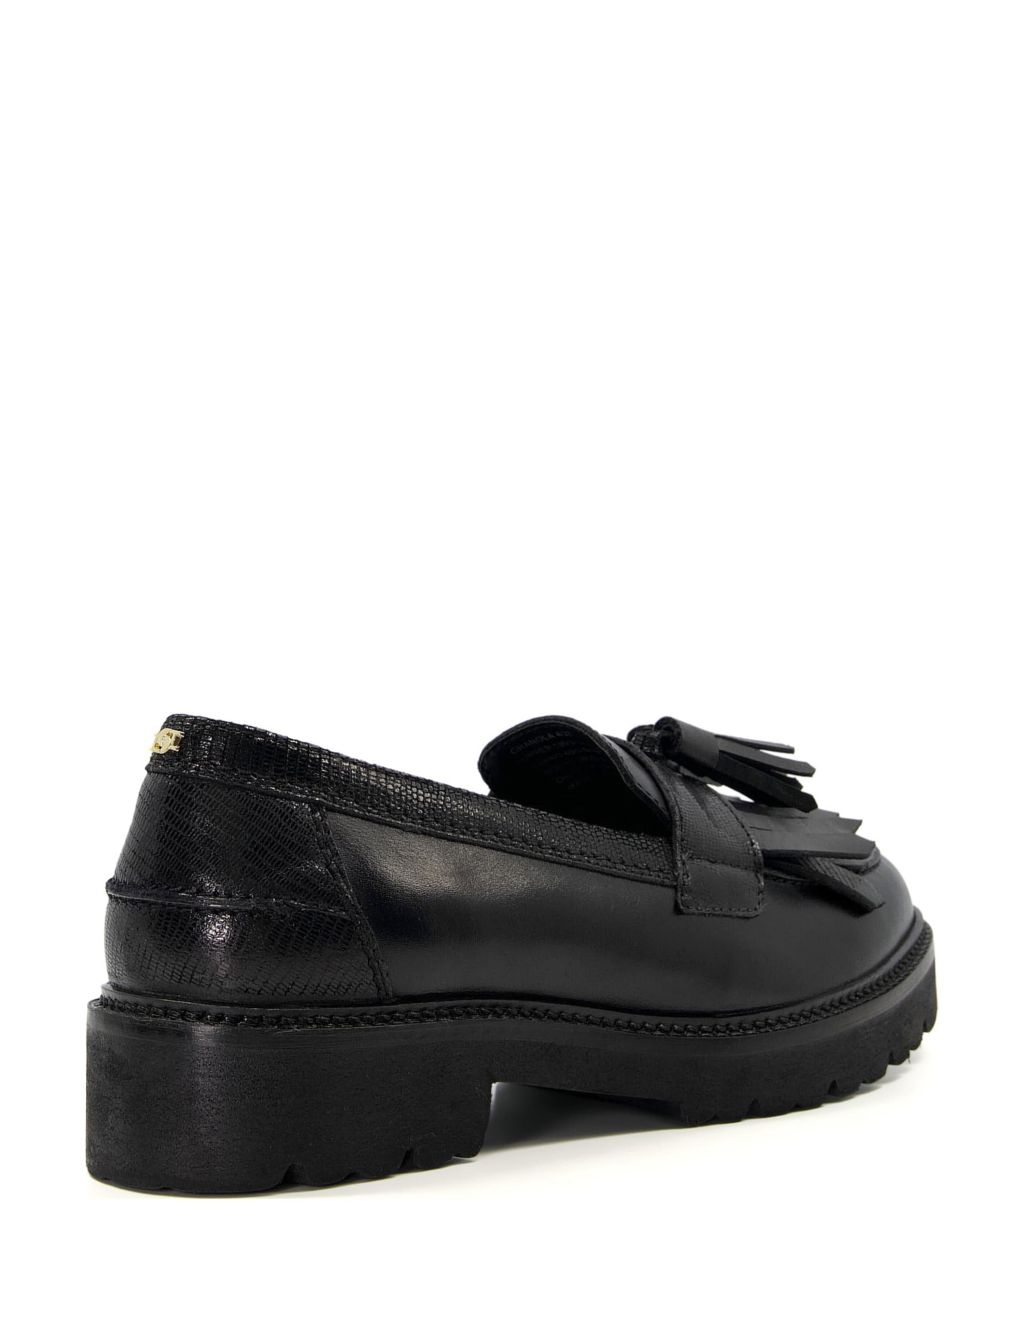 Leather Tassel Flat Loafers image 3